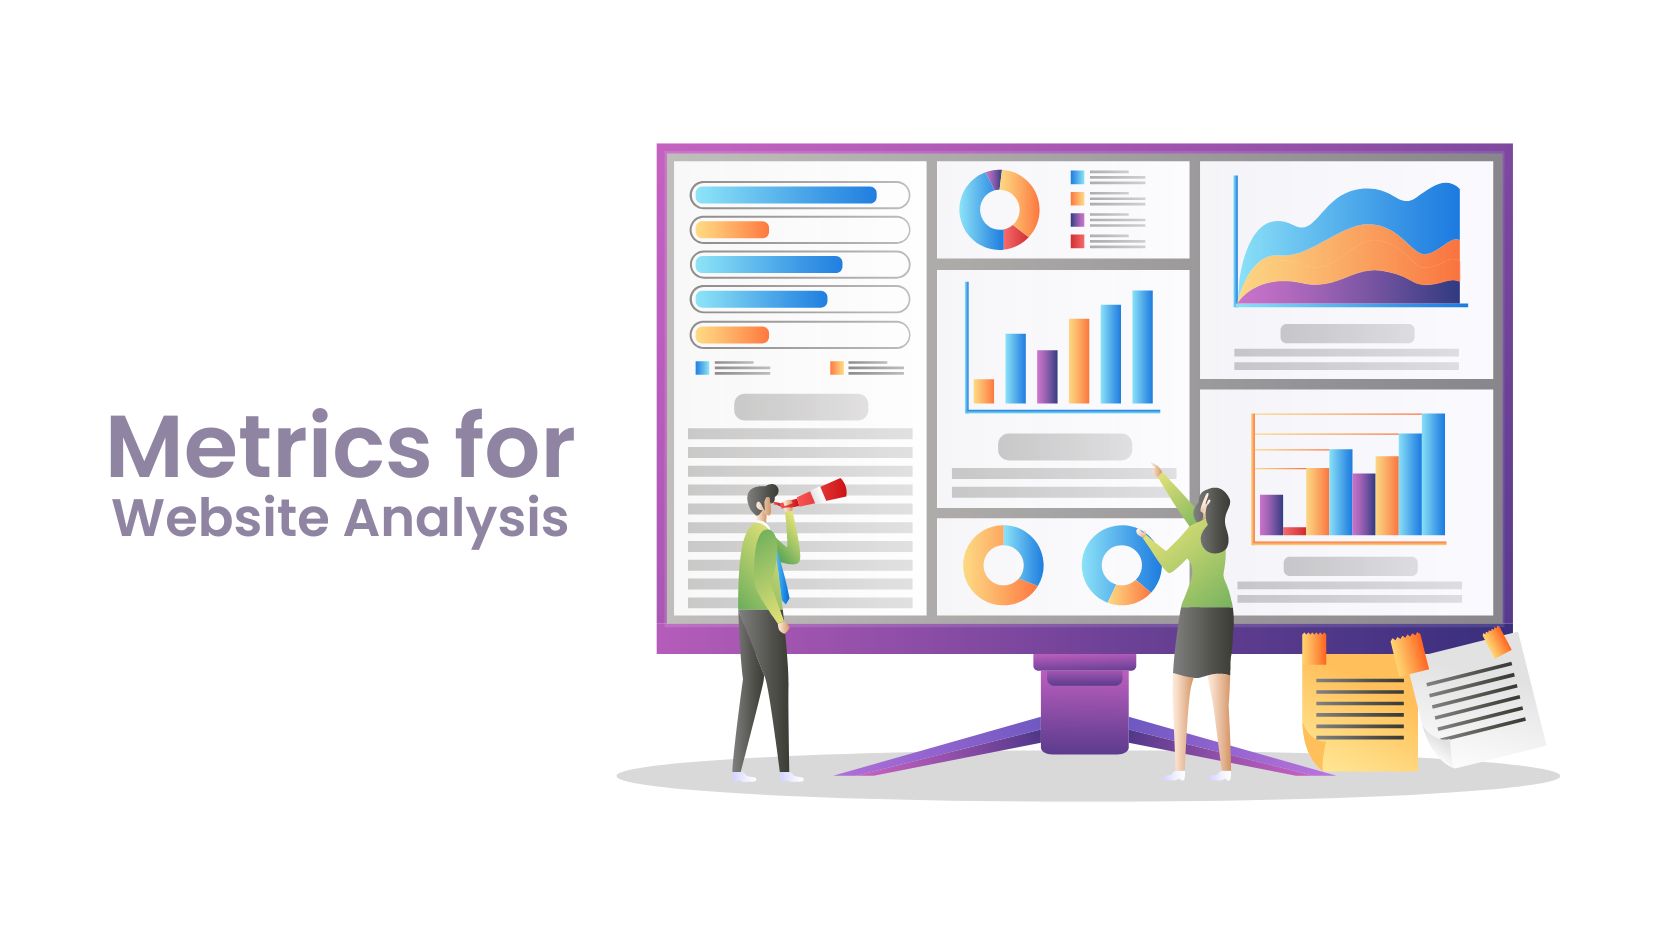 Key Metrics for Website Analysis when using Google Analytics